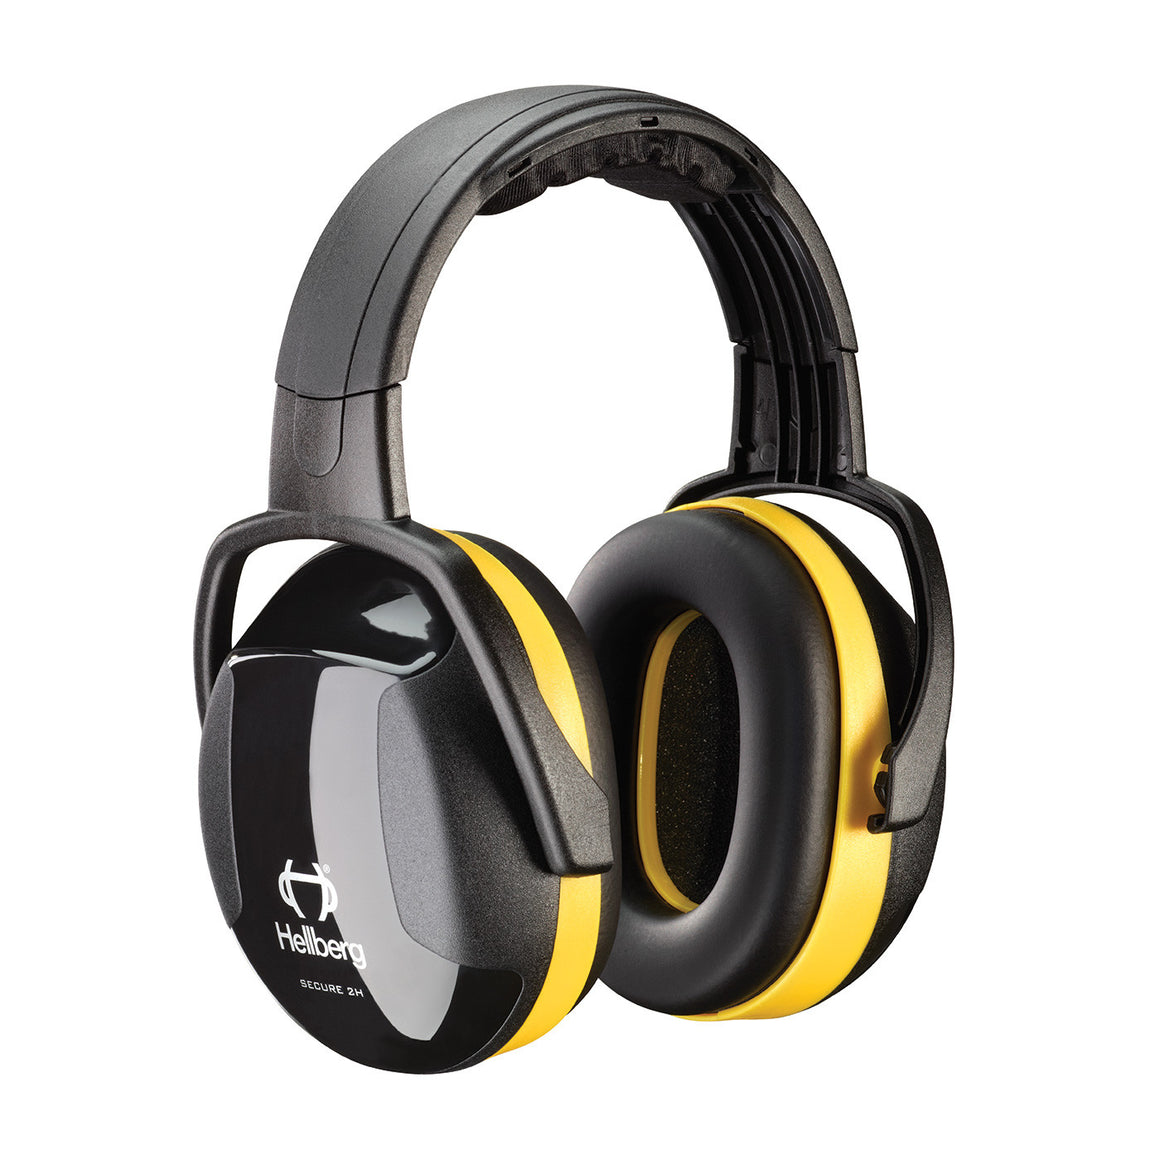 263-41002 - Ear Muff, Secure Passive Headband, 26 dB, Yellow